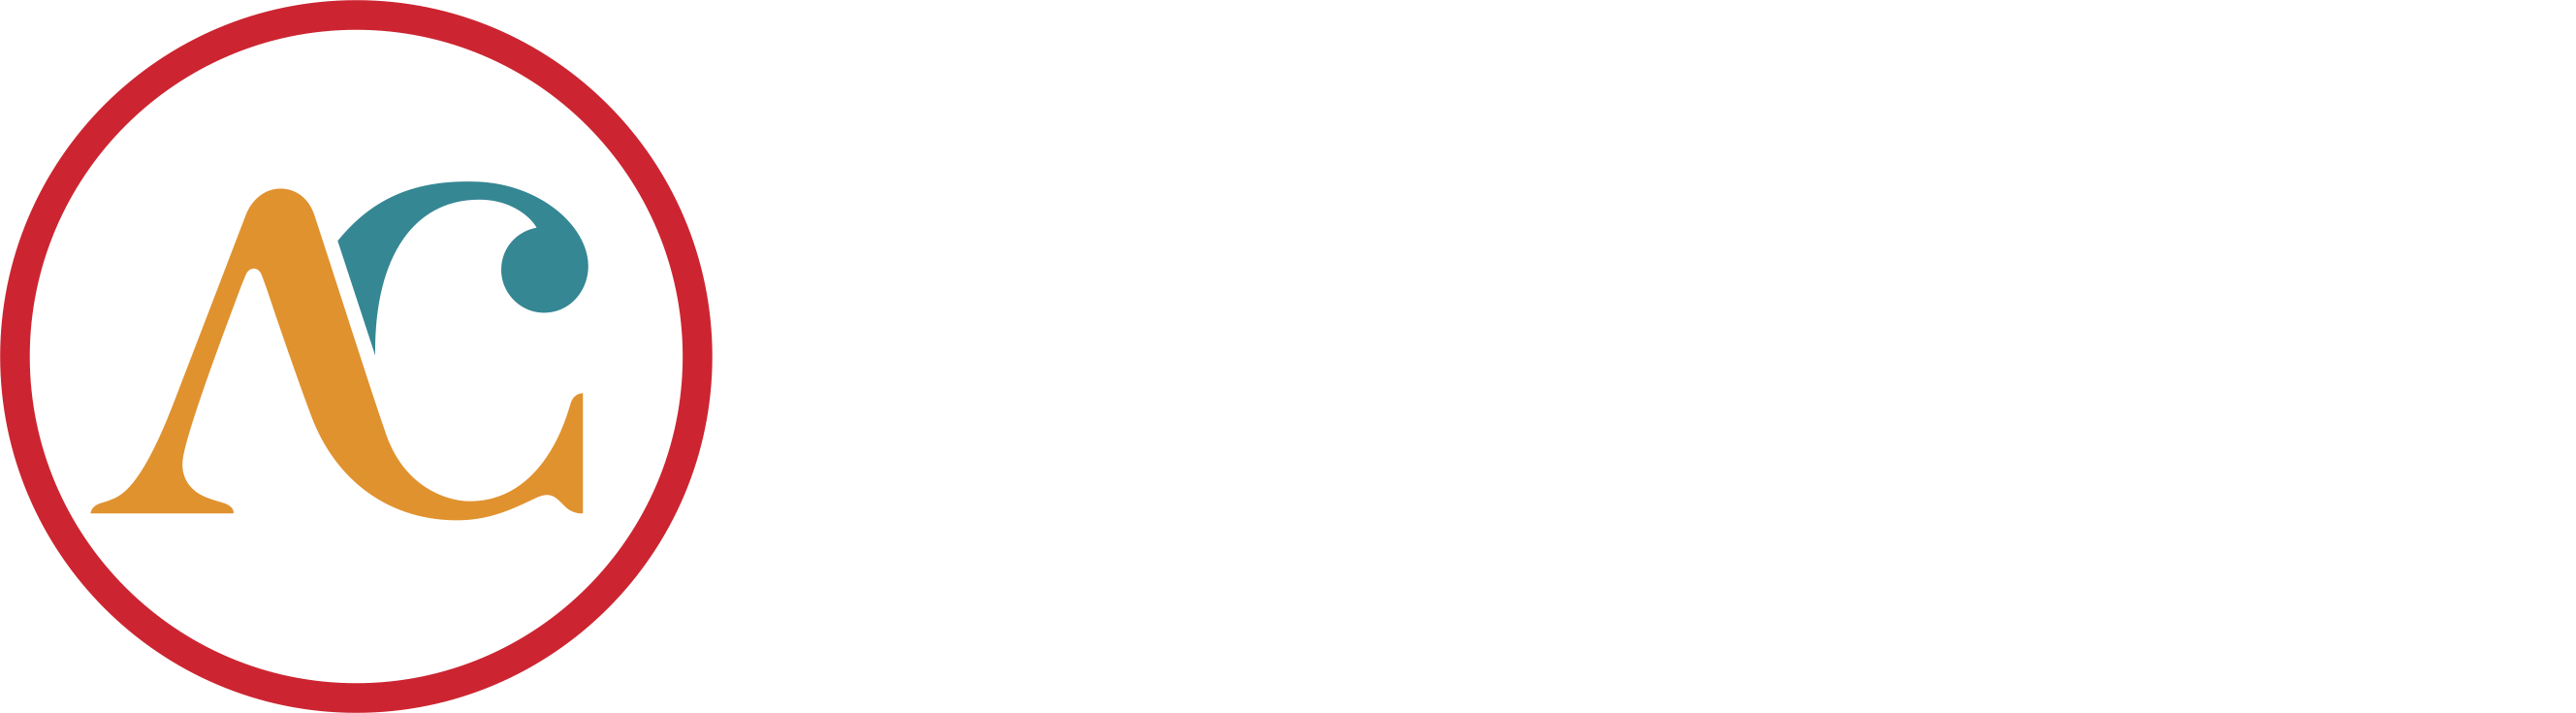 Ardent logo full color on black